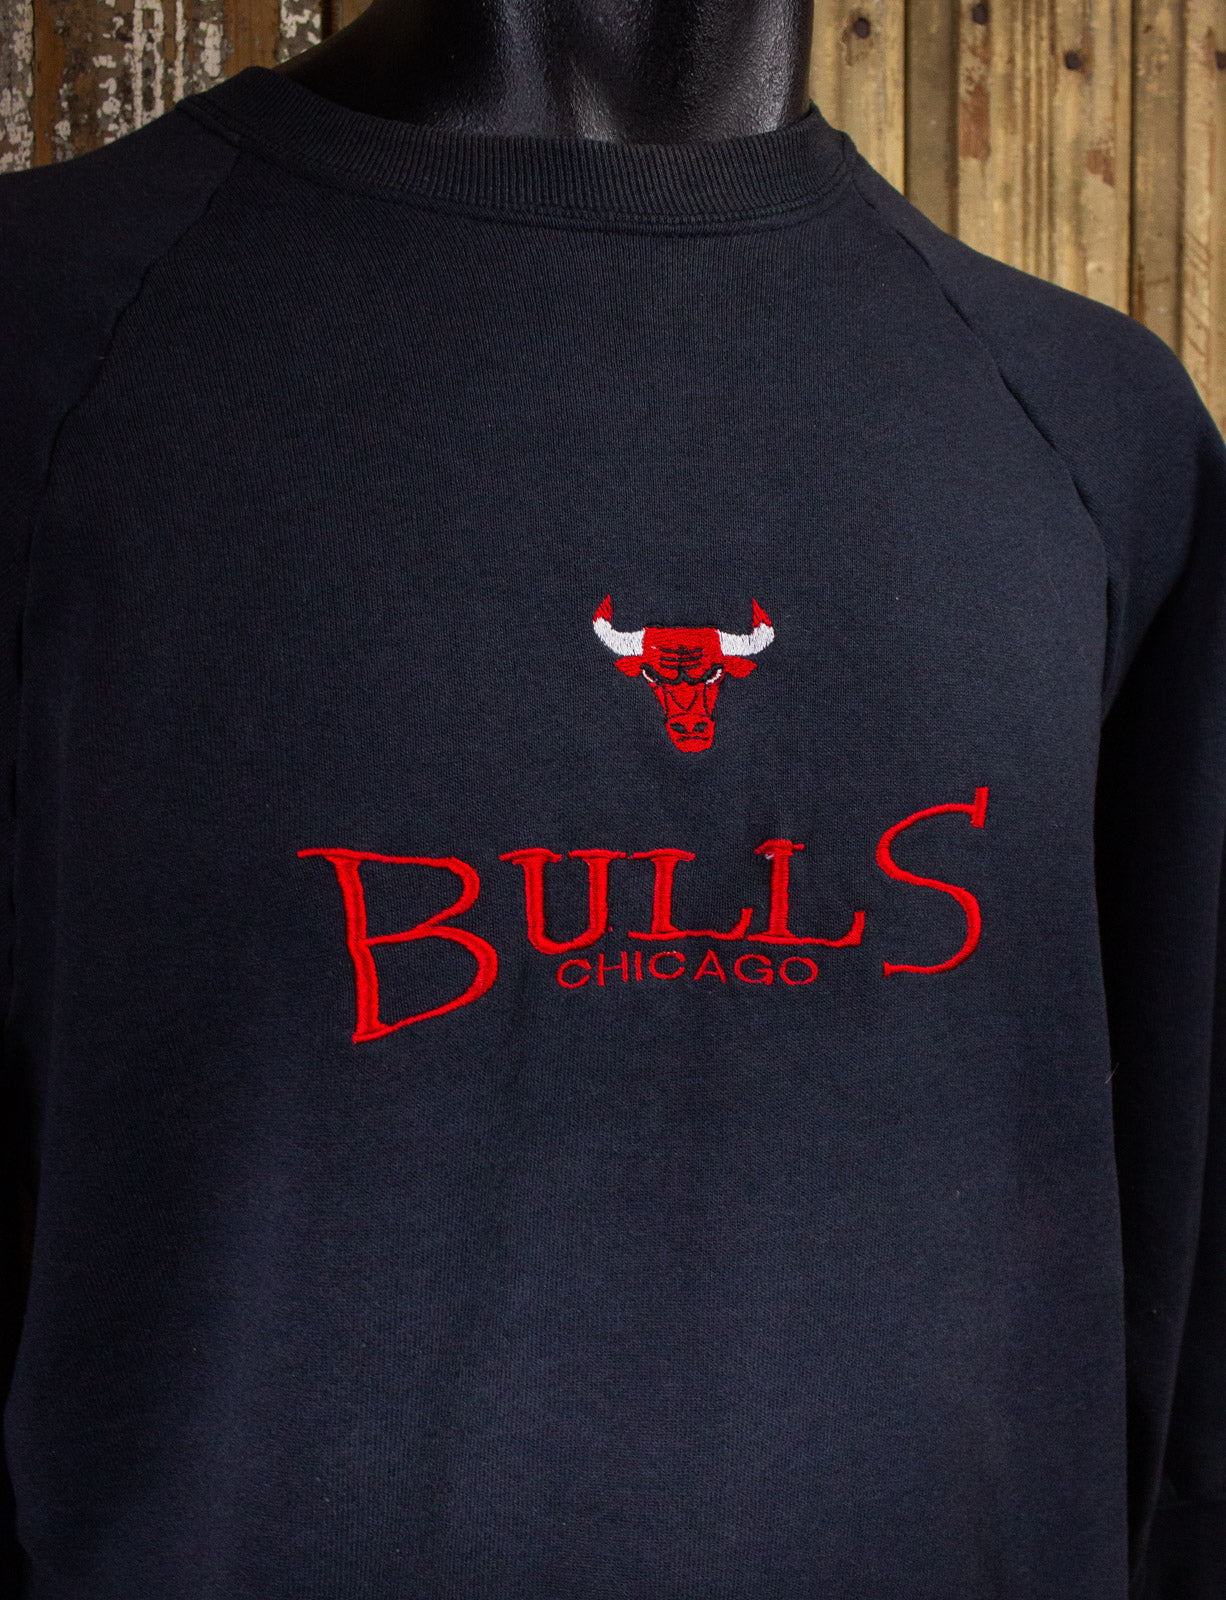 Vintage Chicago Bulls Sweatshirt 90s Black Large